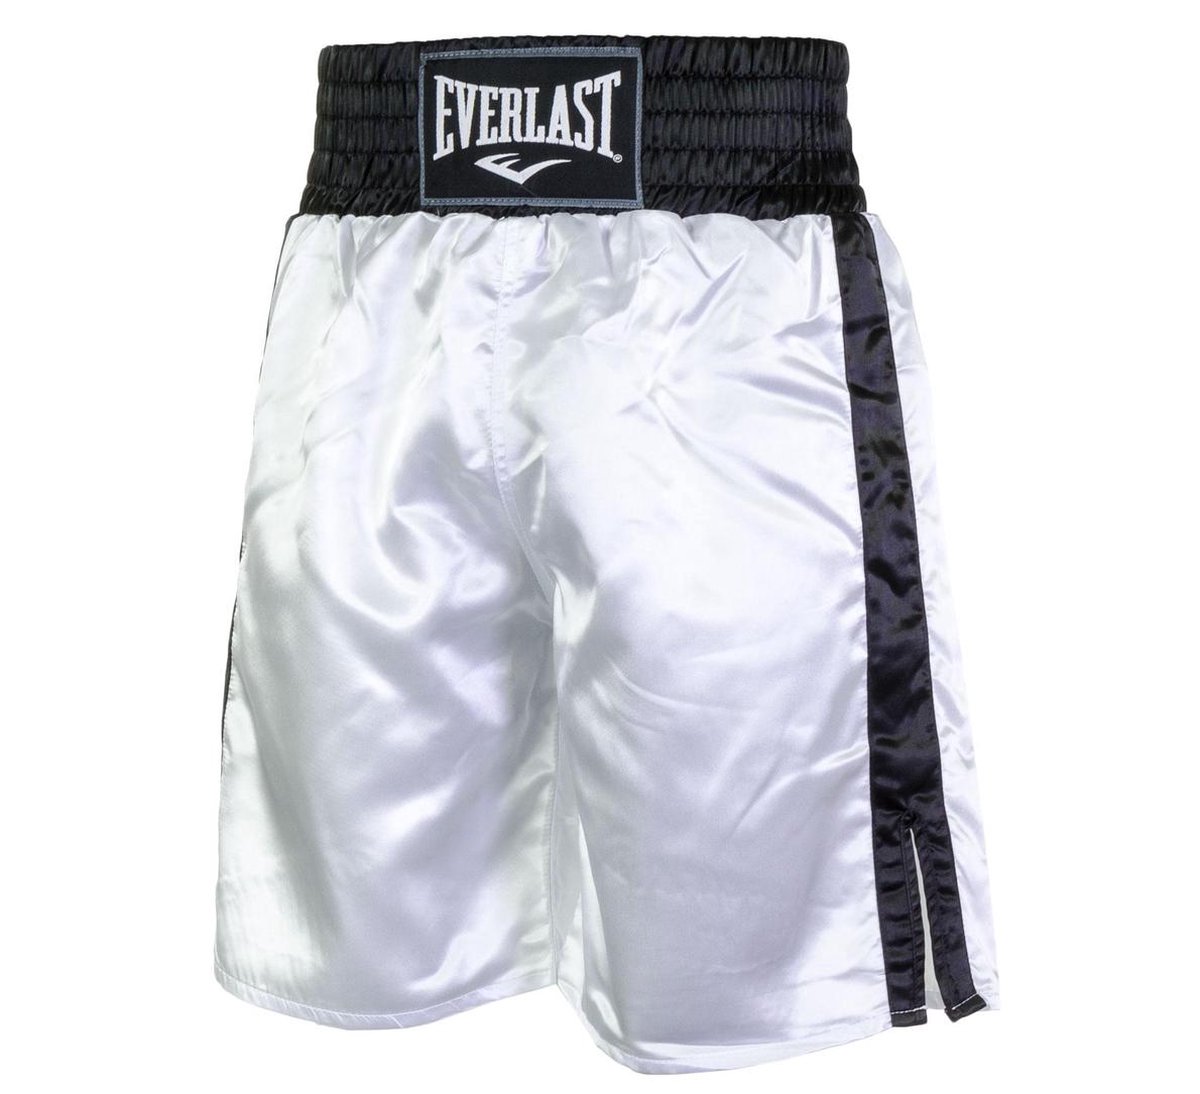 Everlast Pro Boxing Short Boksbroek - Maat L - Unisex - wit/zwart | bol.com